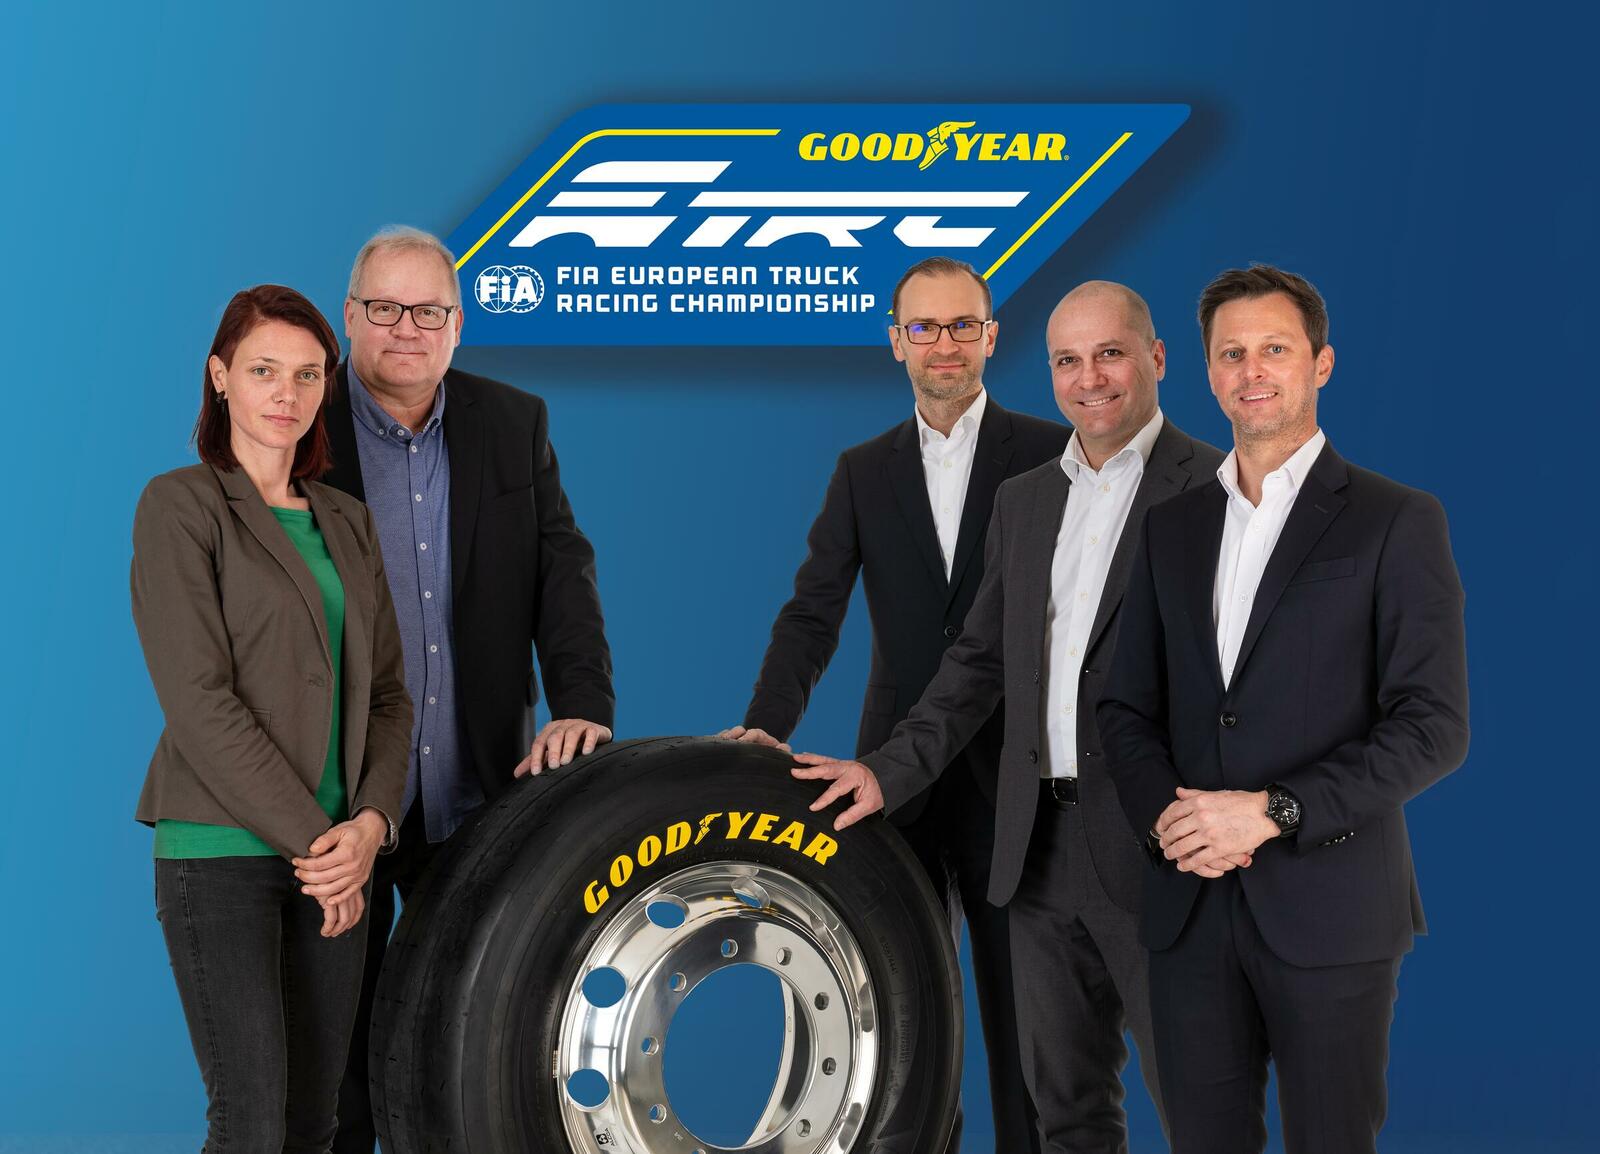 Ab sofort heißt es offiziell: Goodyear FIA European Truck Racing Championship.